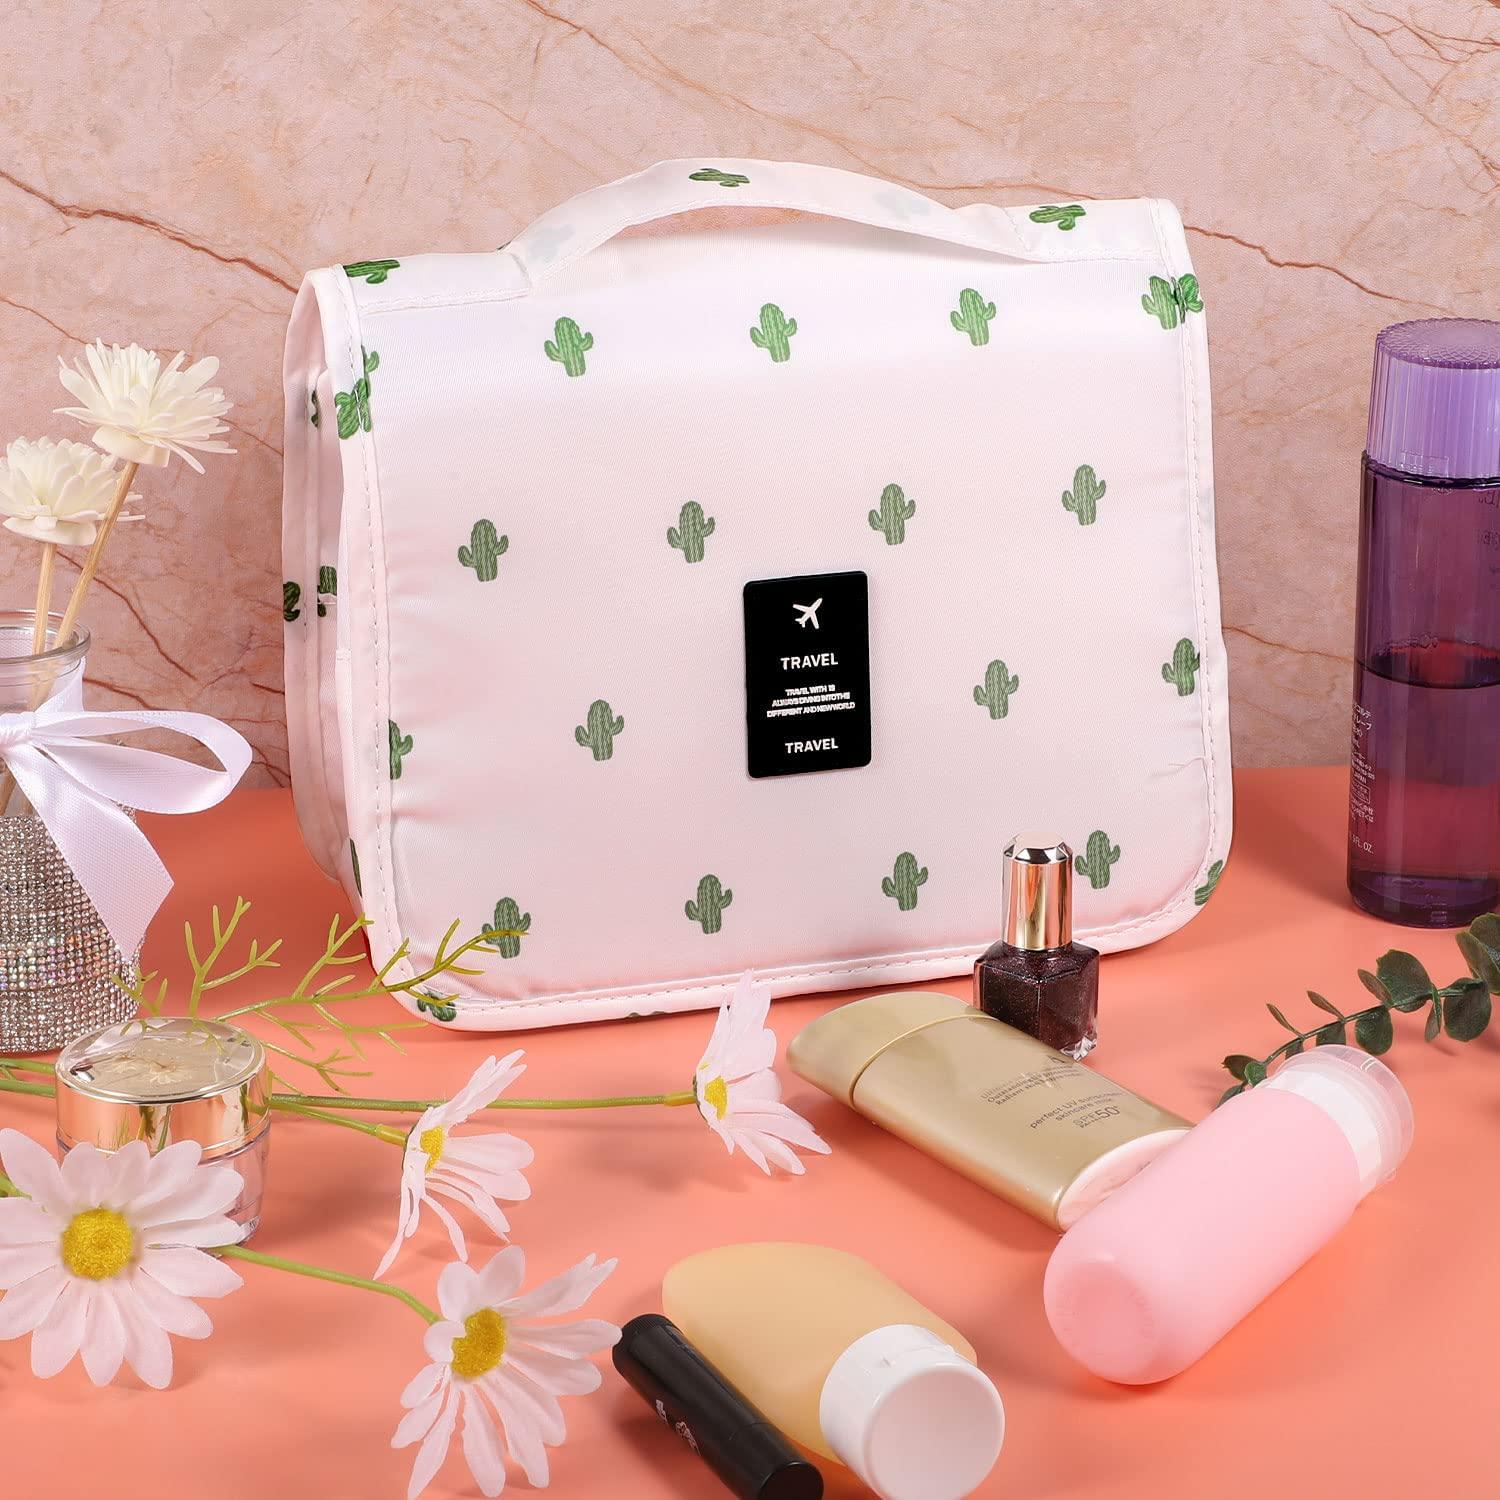 Hanging Travel Toiletry Bag, Portable Travel Makeup Bag with